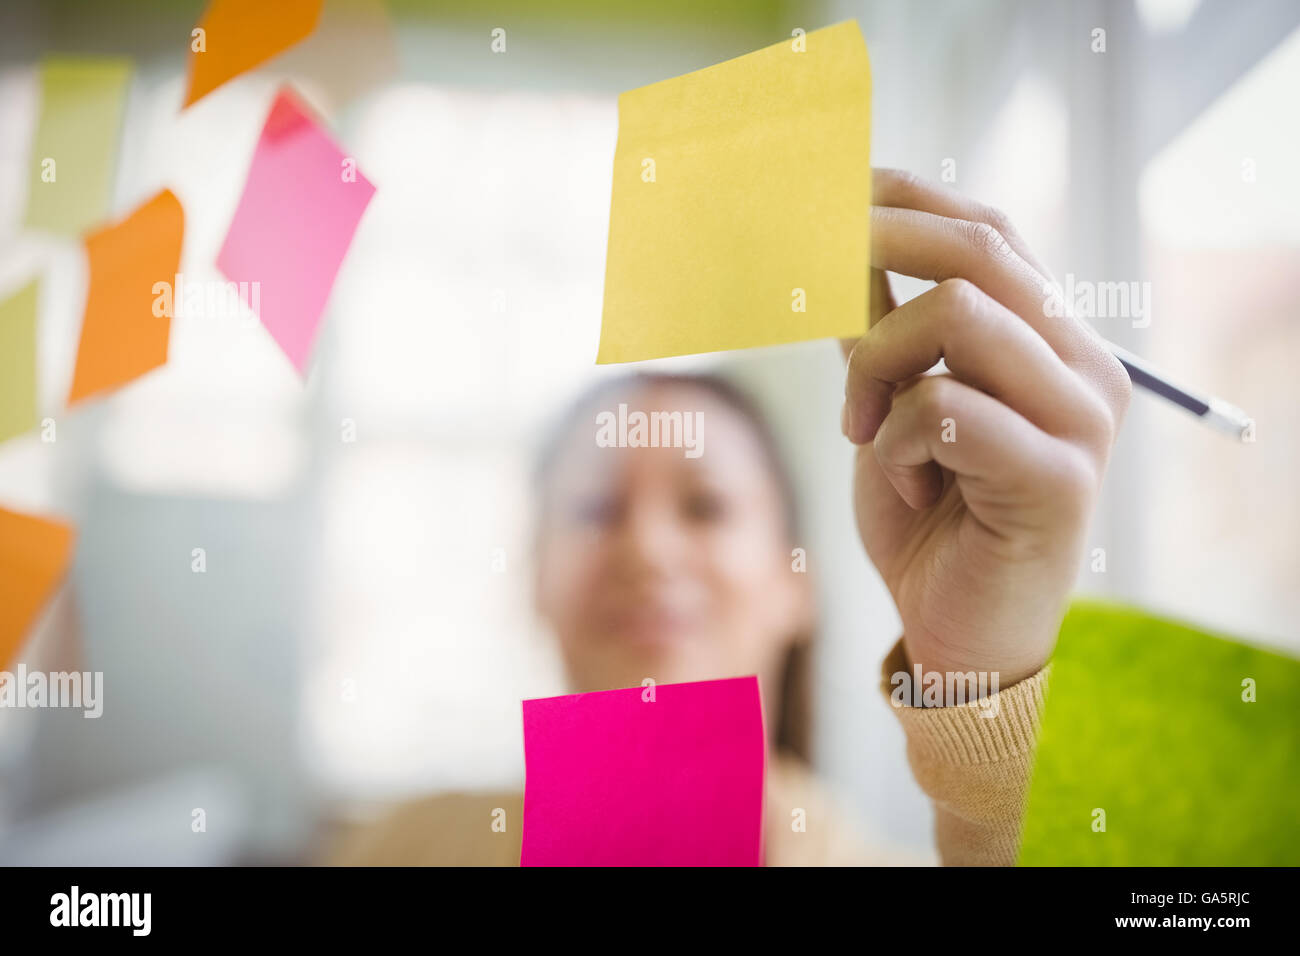 Businesswoman writing on adhesive note Stock Photo